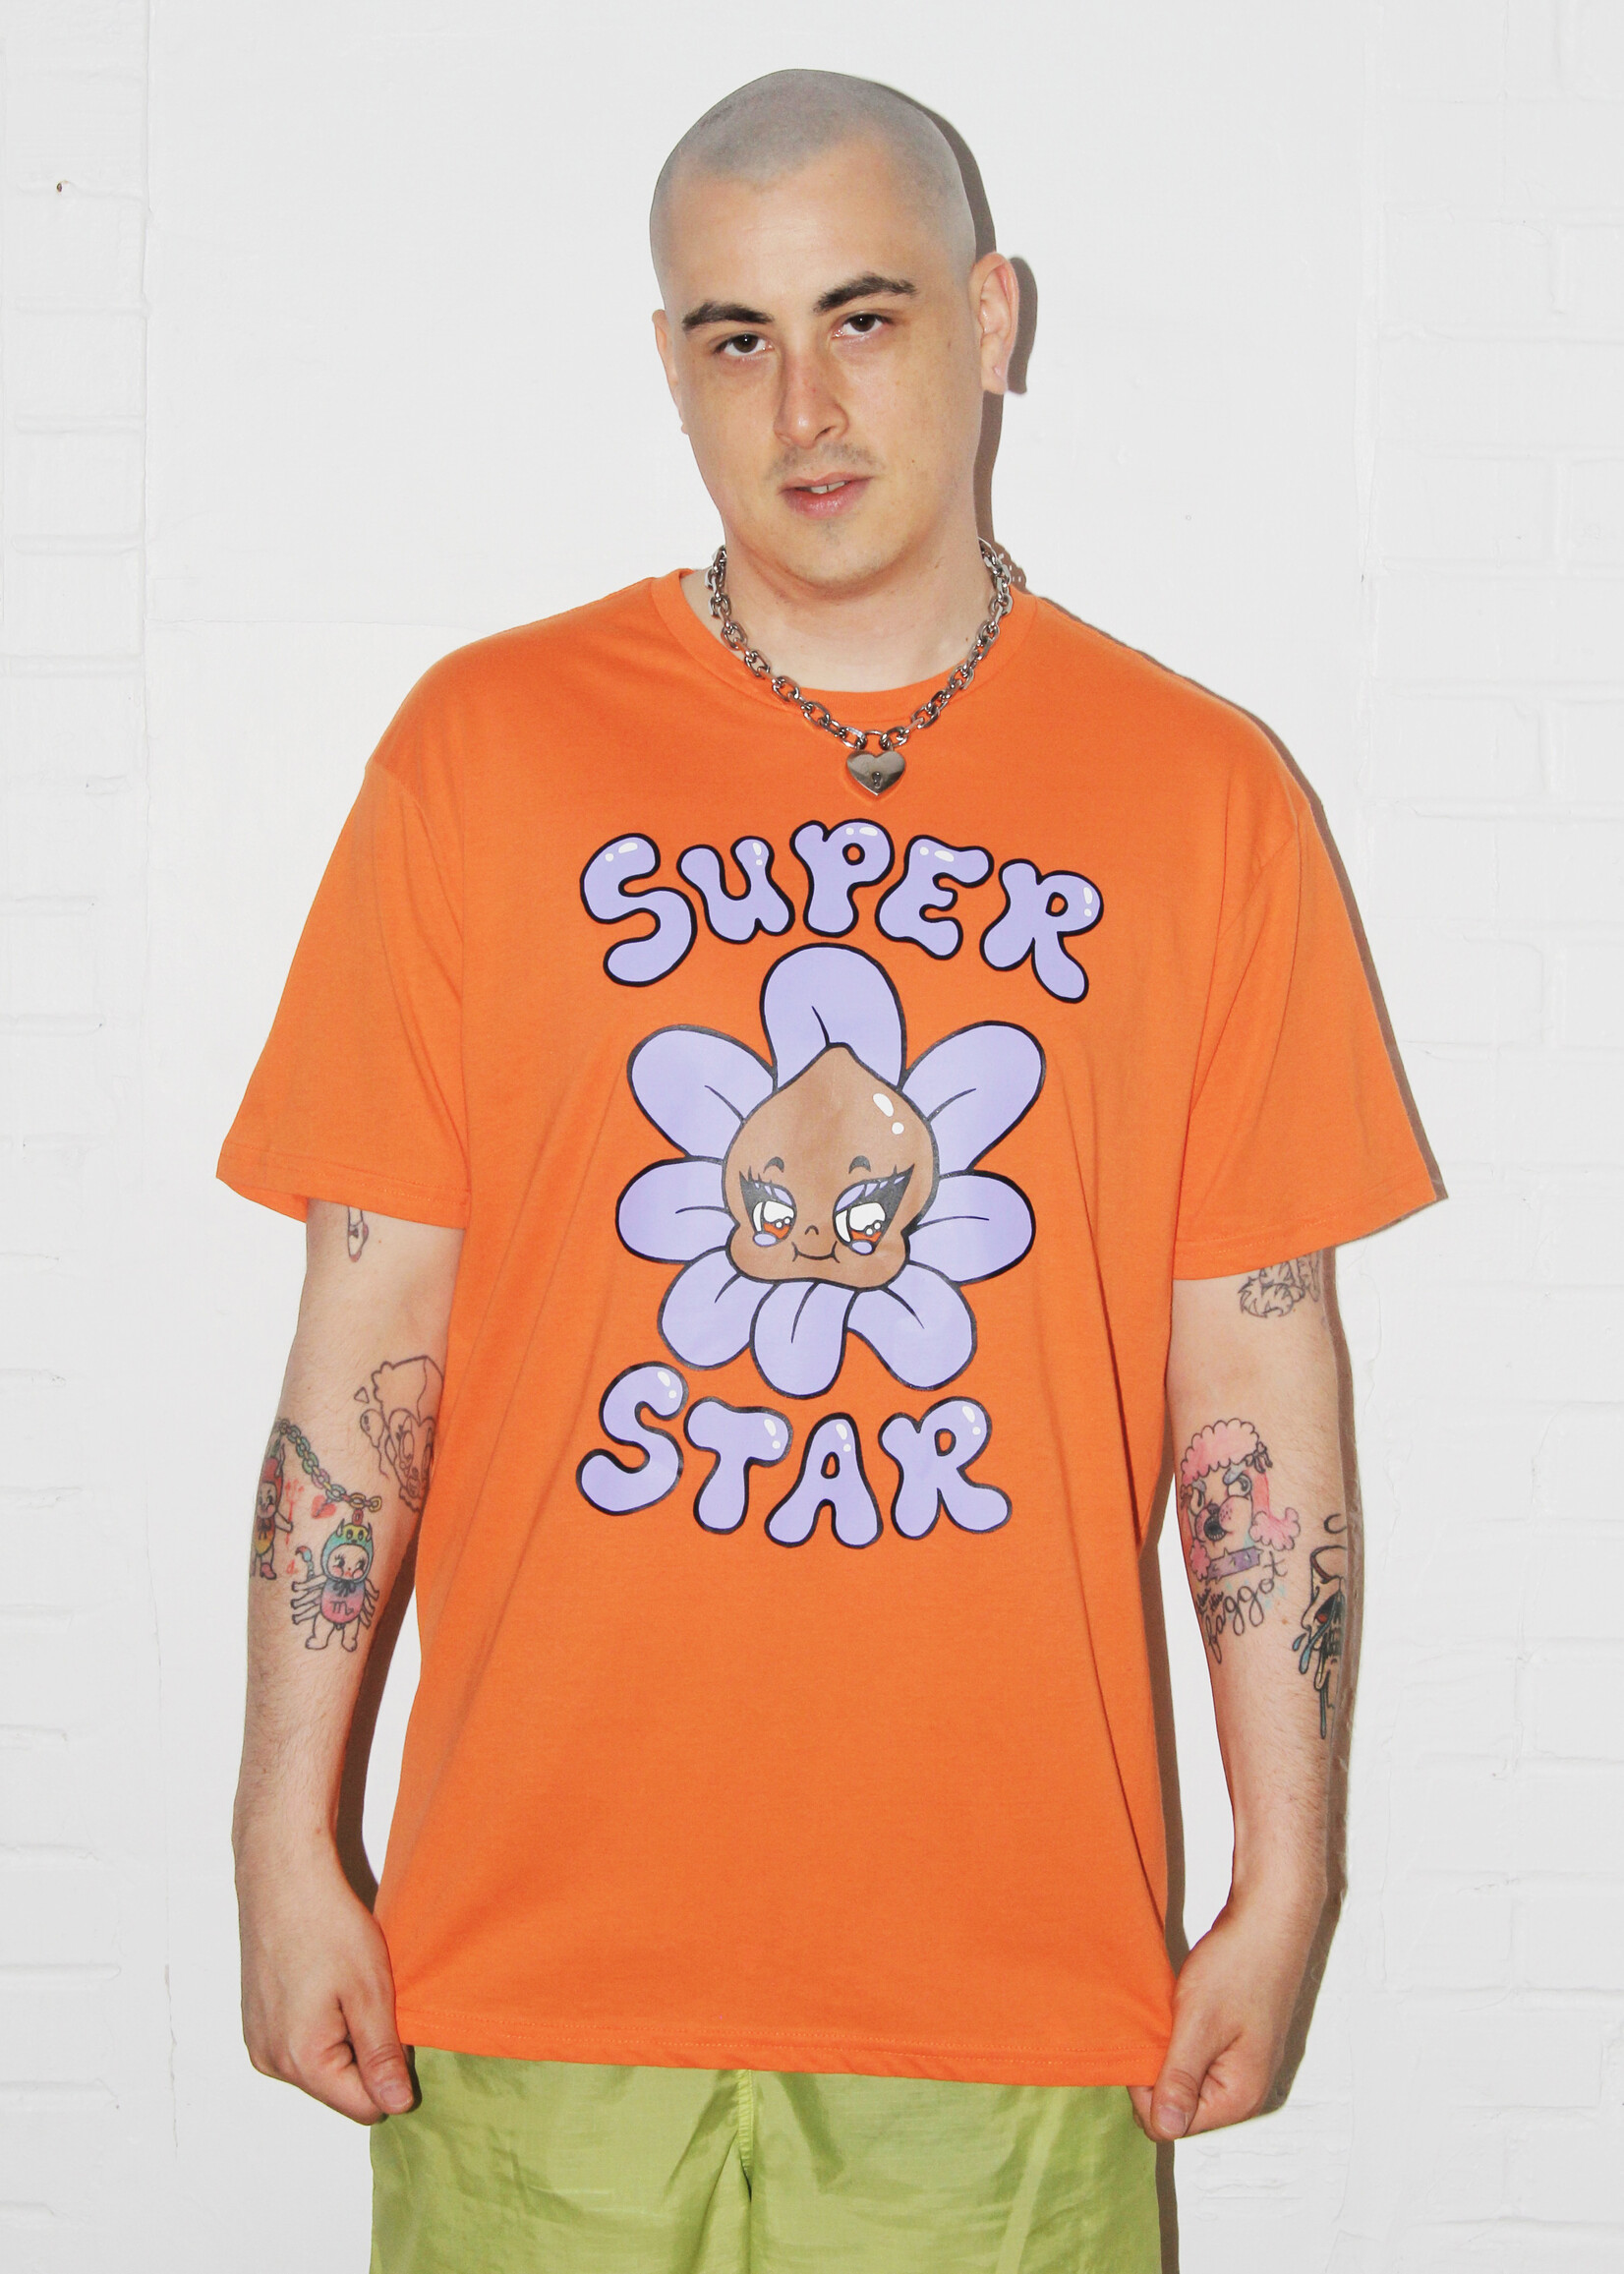 Studio Citizen x Sisi Superstar Studio Citizen x Sisi Superstar Super Star Orange T-shirt